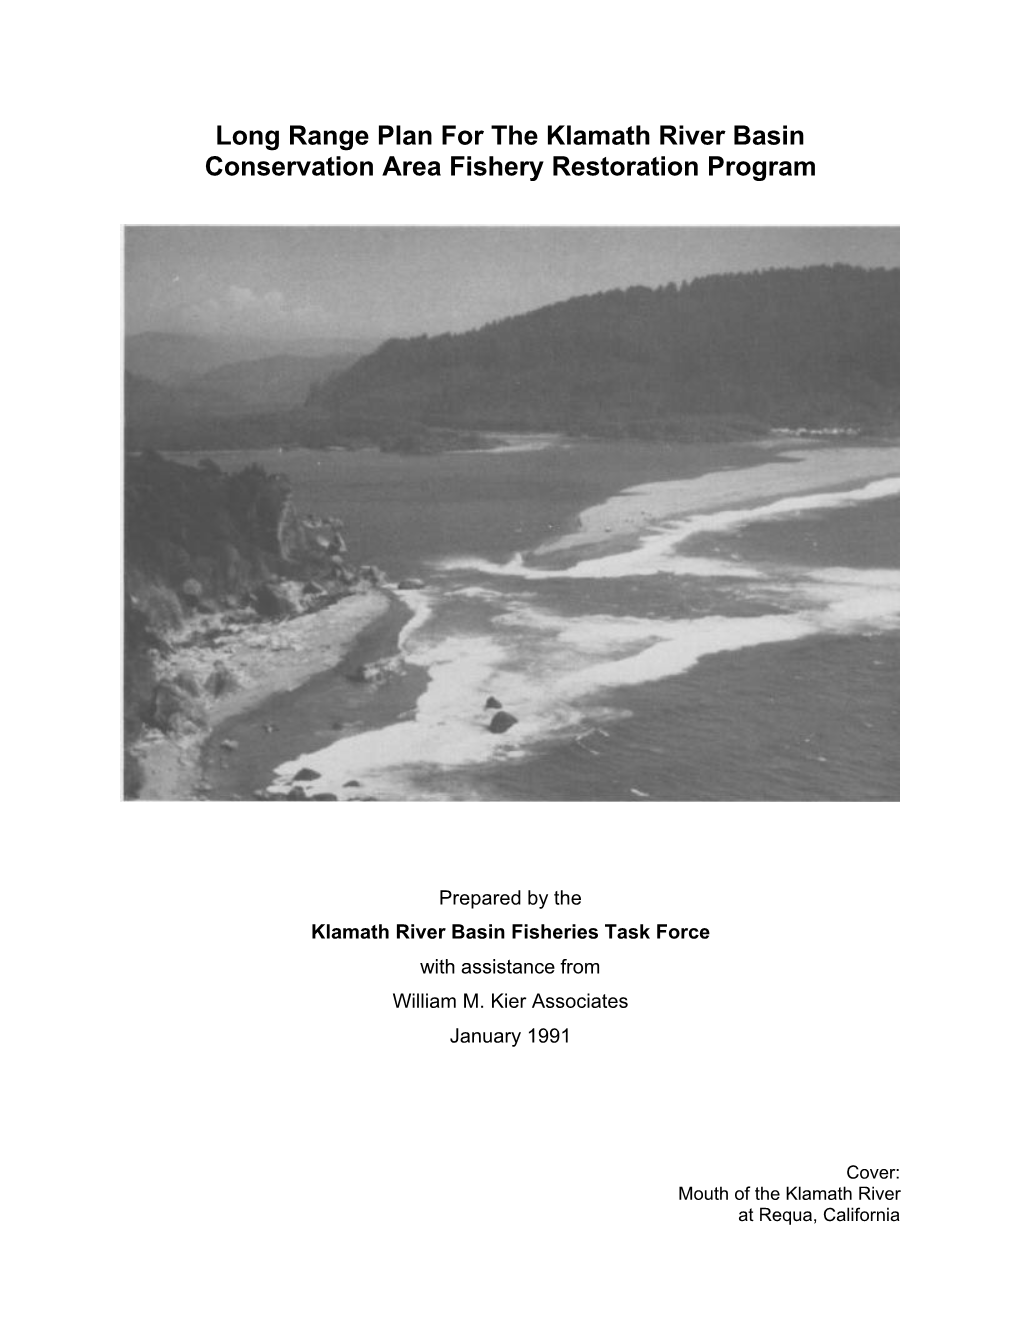 Long Range Plan for the Klamath River Basin Conservation Area Fishery Restoration Program